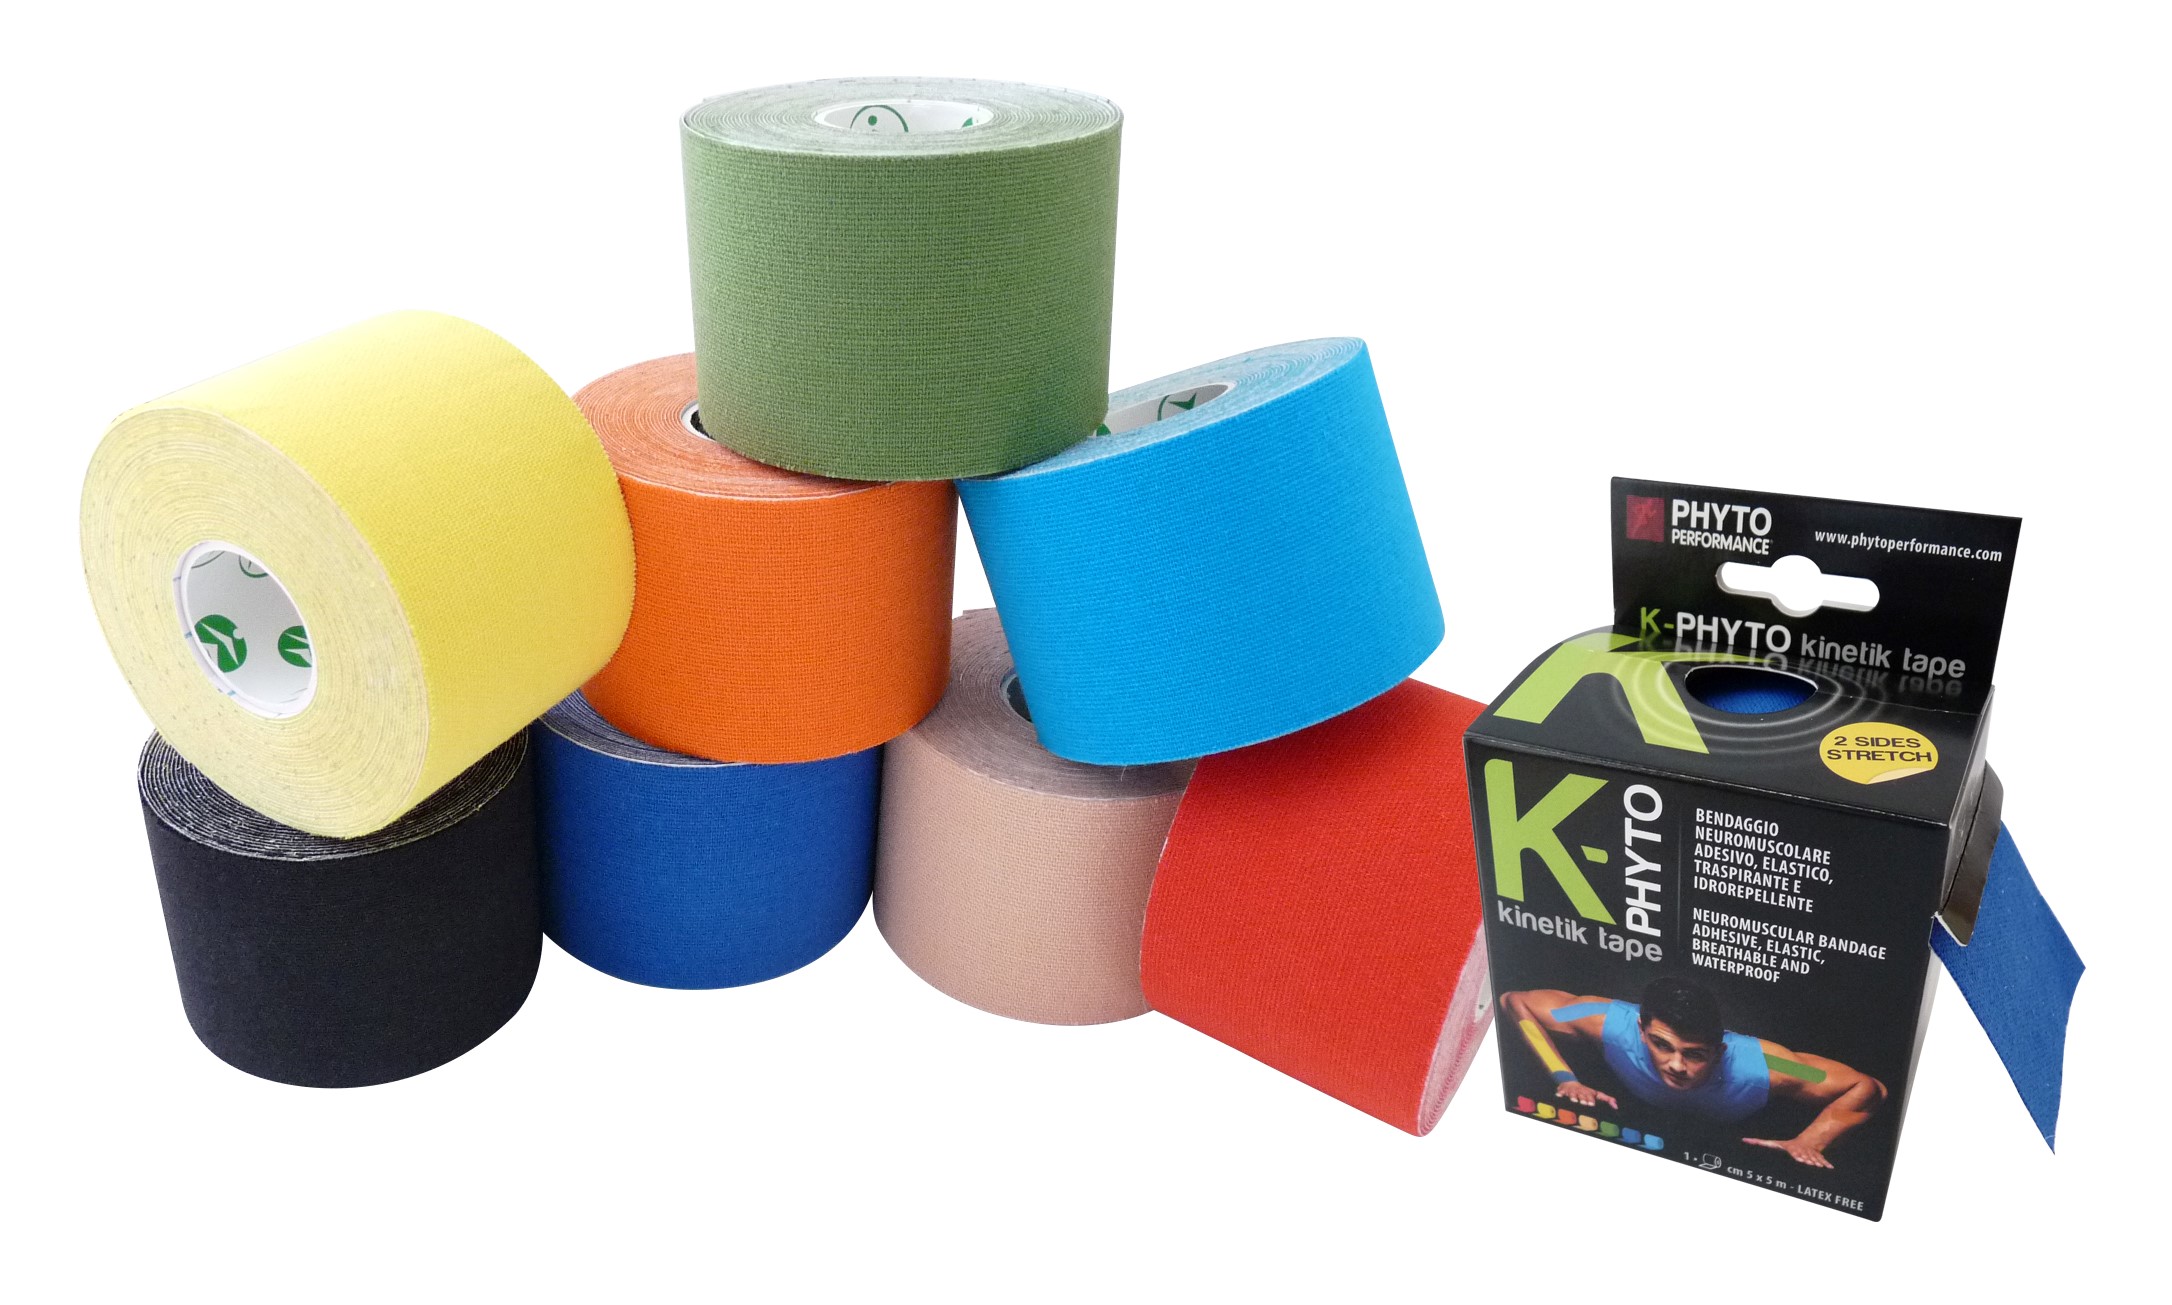 Kinetik Tape K-Phyto 2 Sides Stretch 5cmx5m σε Πράσινο Χρώμα Αθλητική Ταινία Συγκράτησης Μυών REF:K-PH/AST/VER Latex Free PhytoPerformance